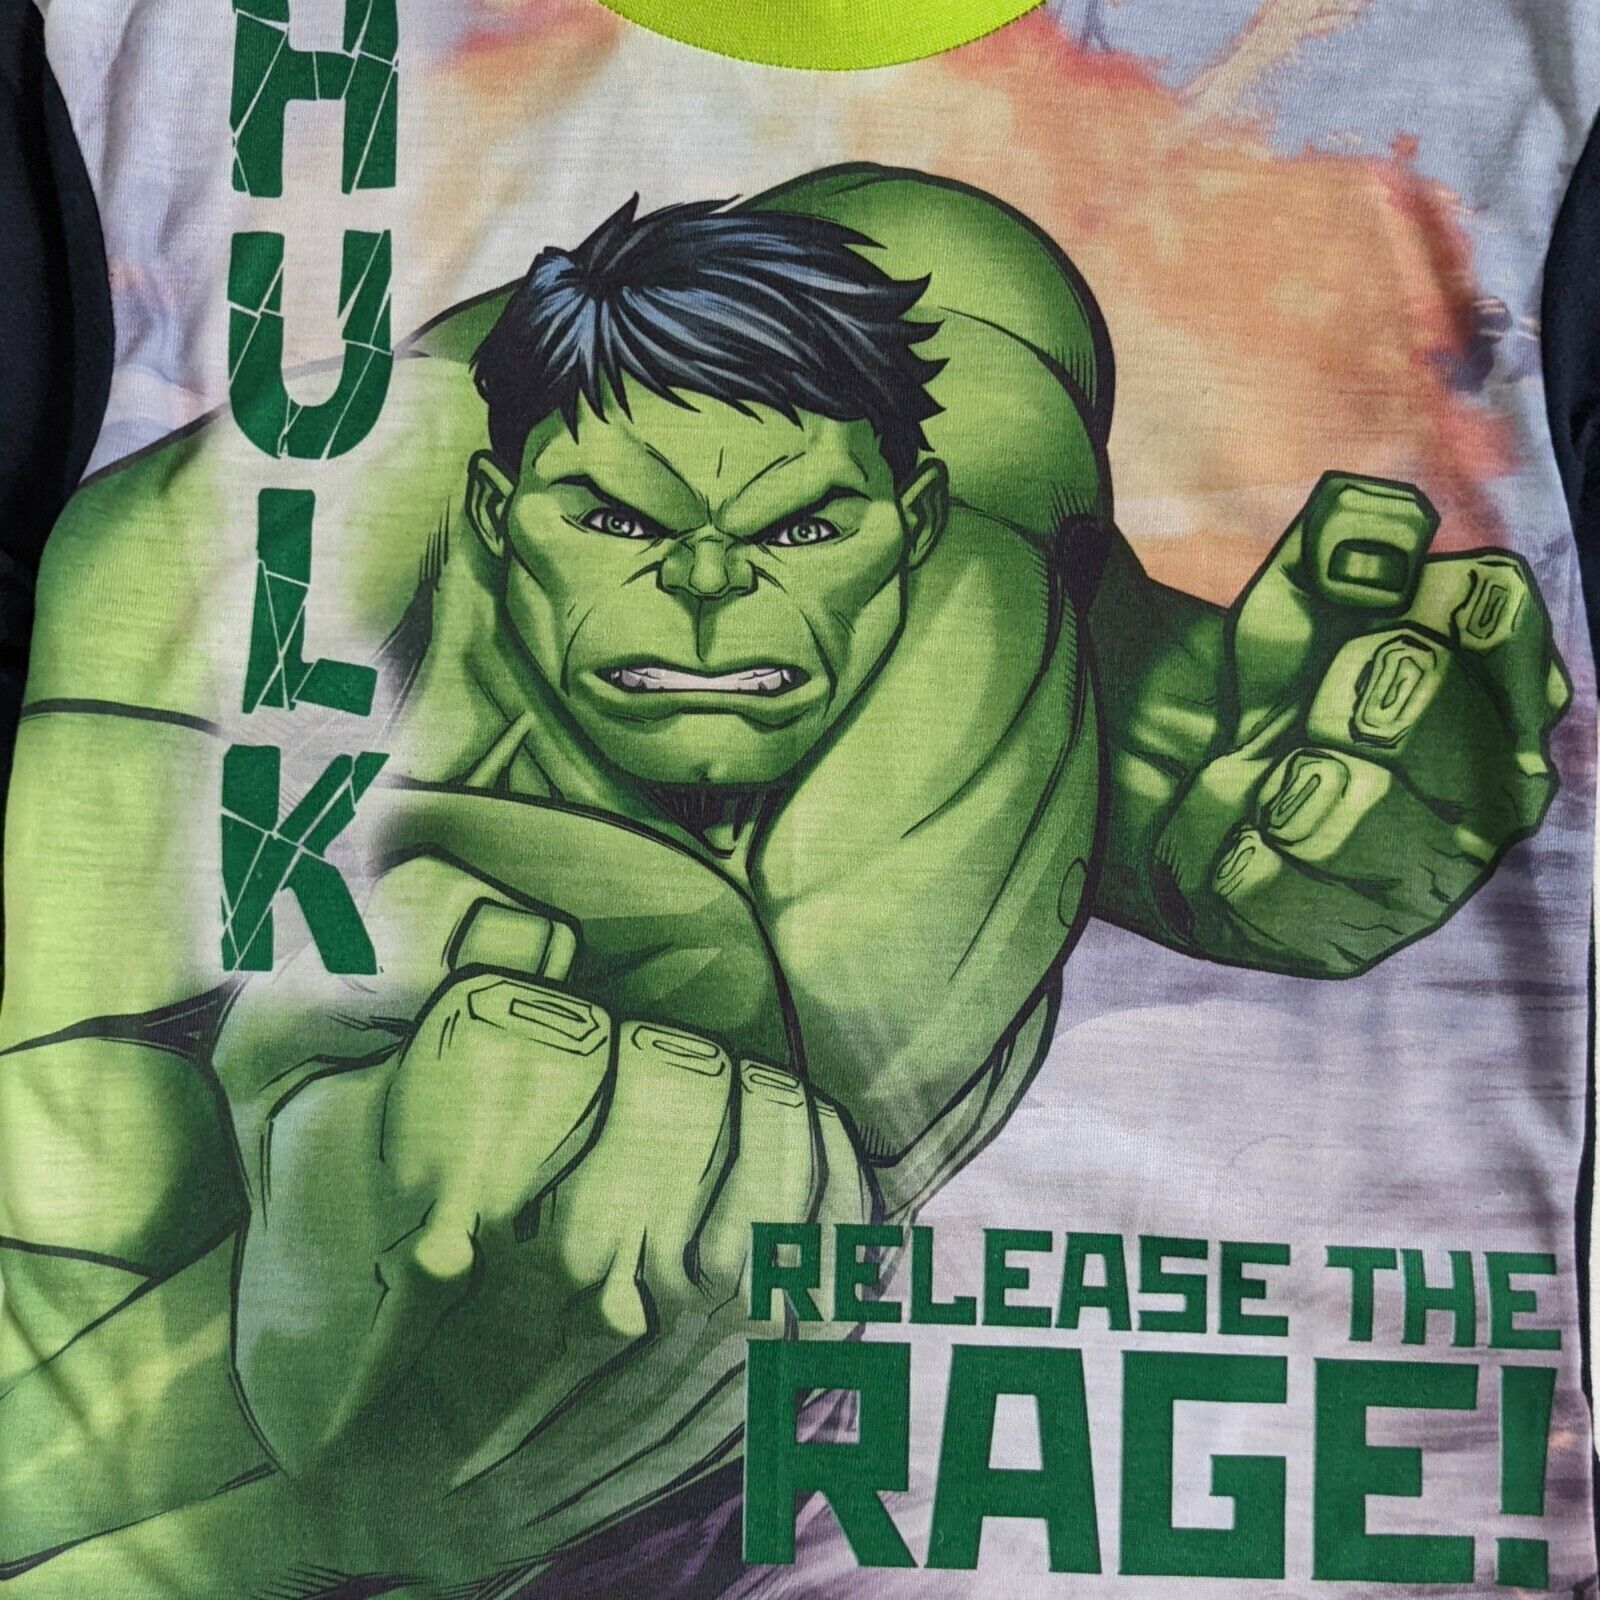 Boys Hulk Avenger Rage Long Sleeve Pjs Sublimation Pyjama